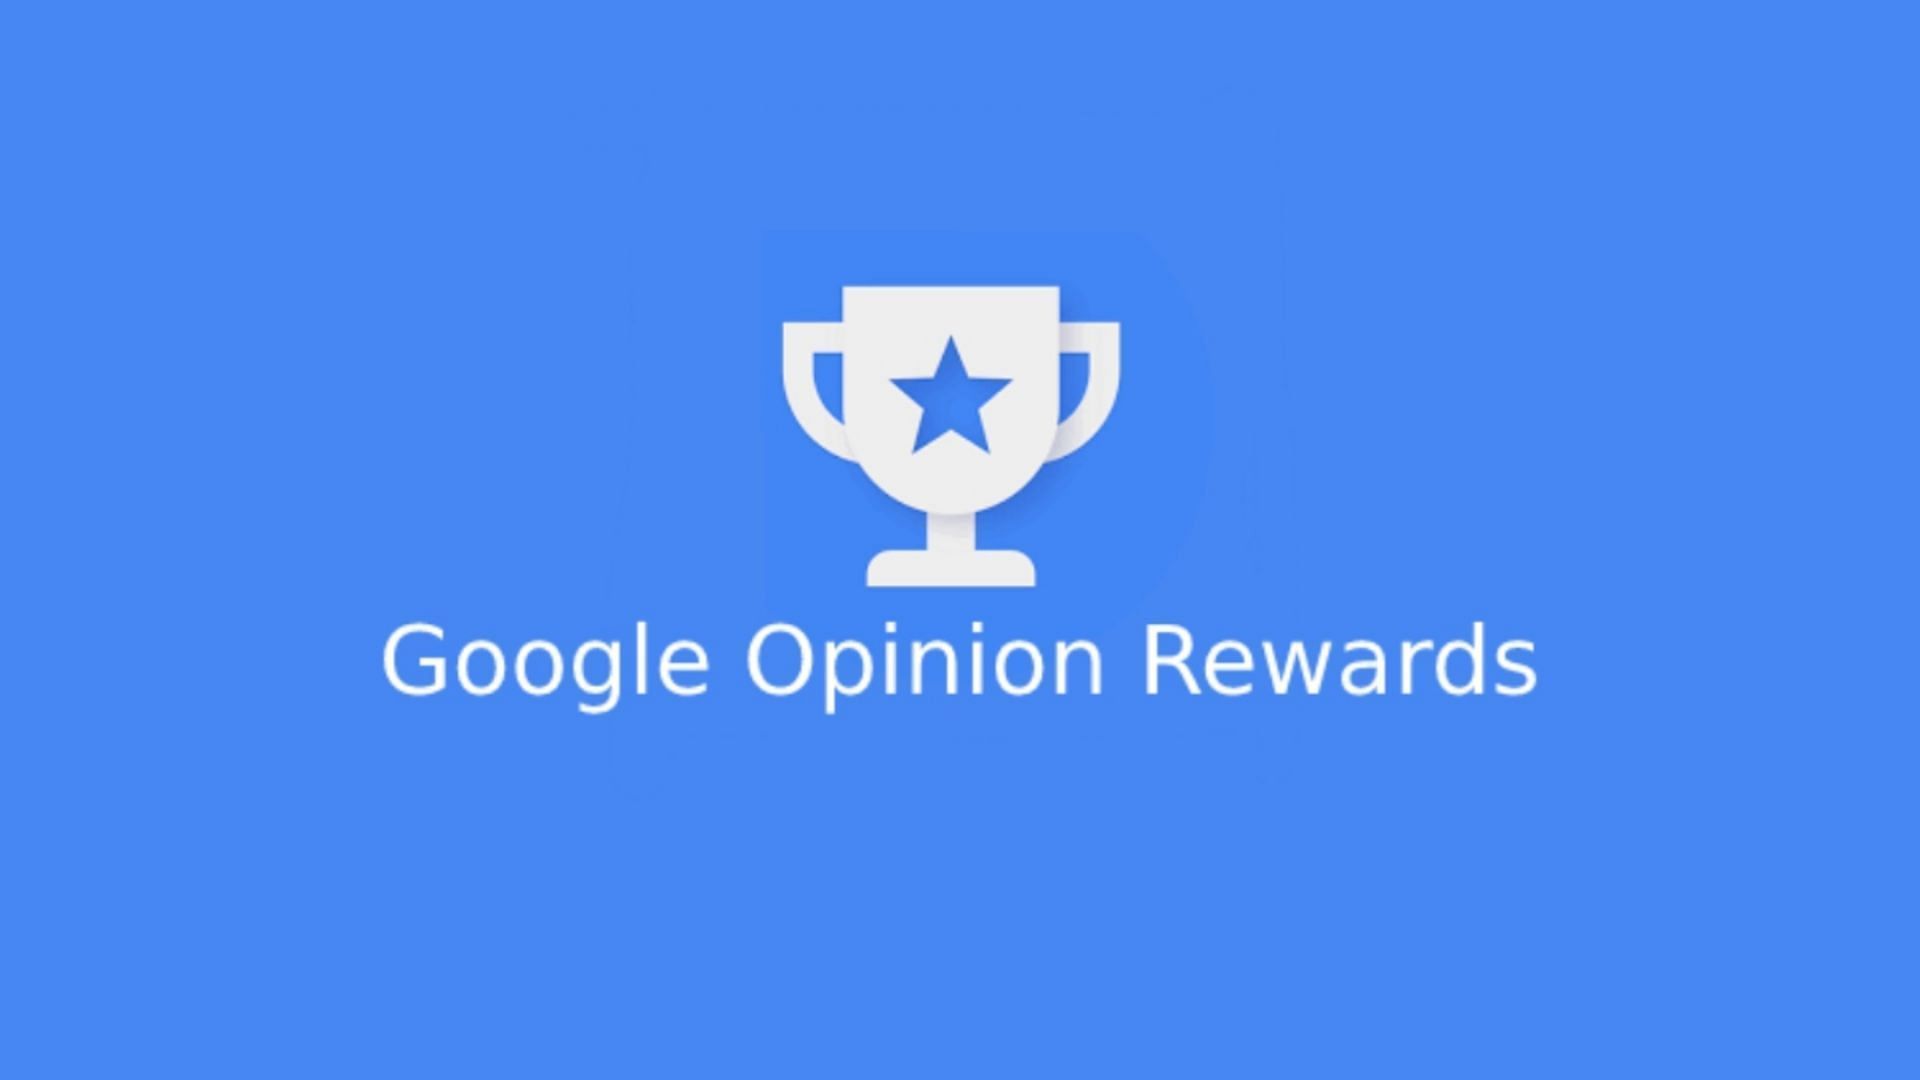 Google Opinion Rewards application provides Google Play Credits by answering surveys. (Image via Google)